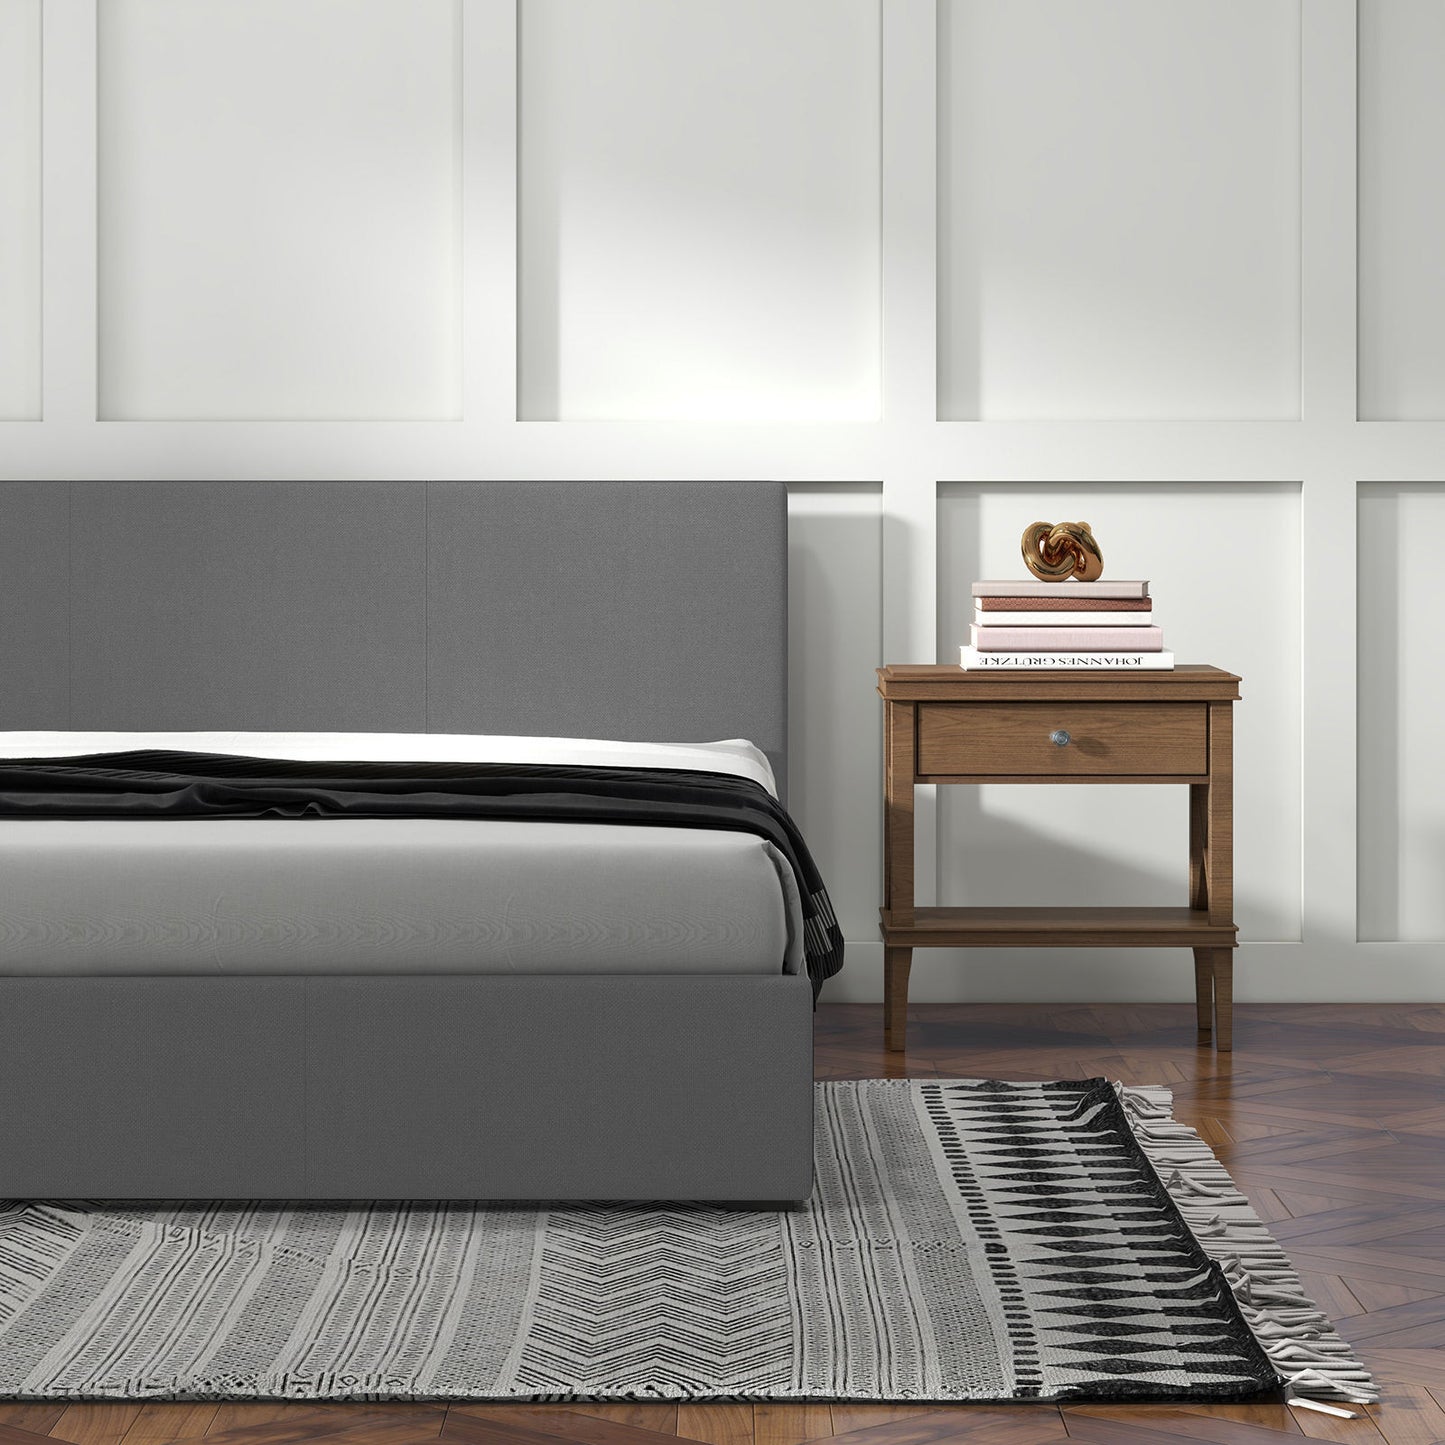 Sienna Luxury Bed with Headboard - Grey King Single